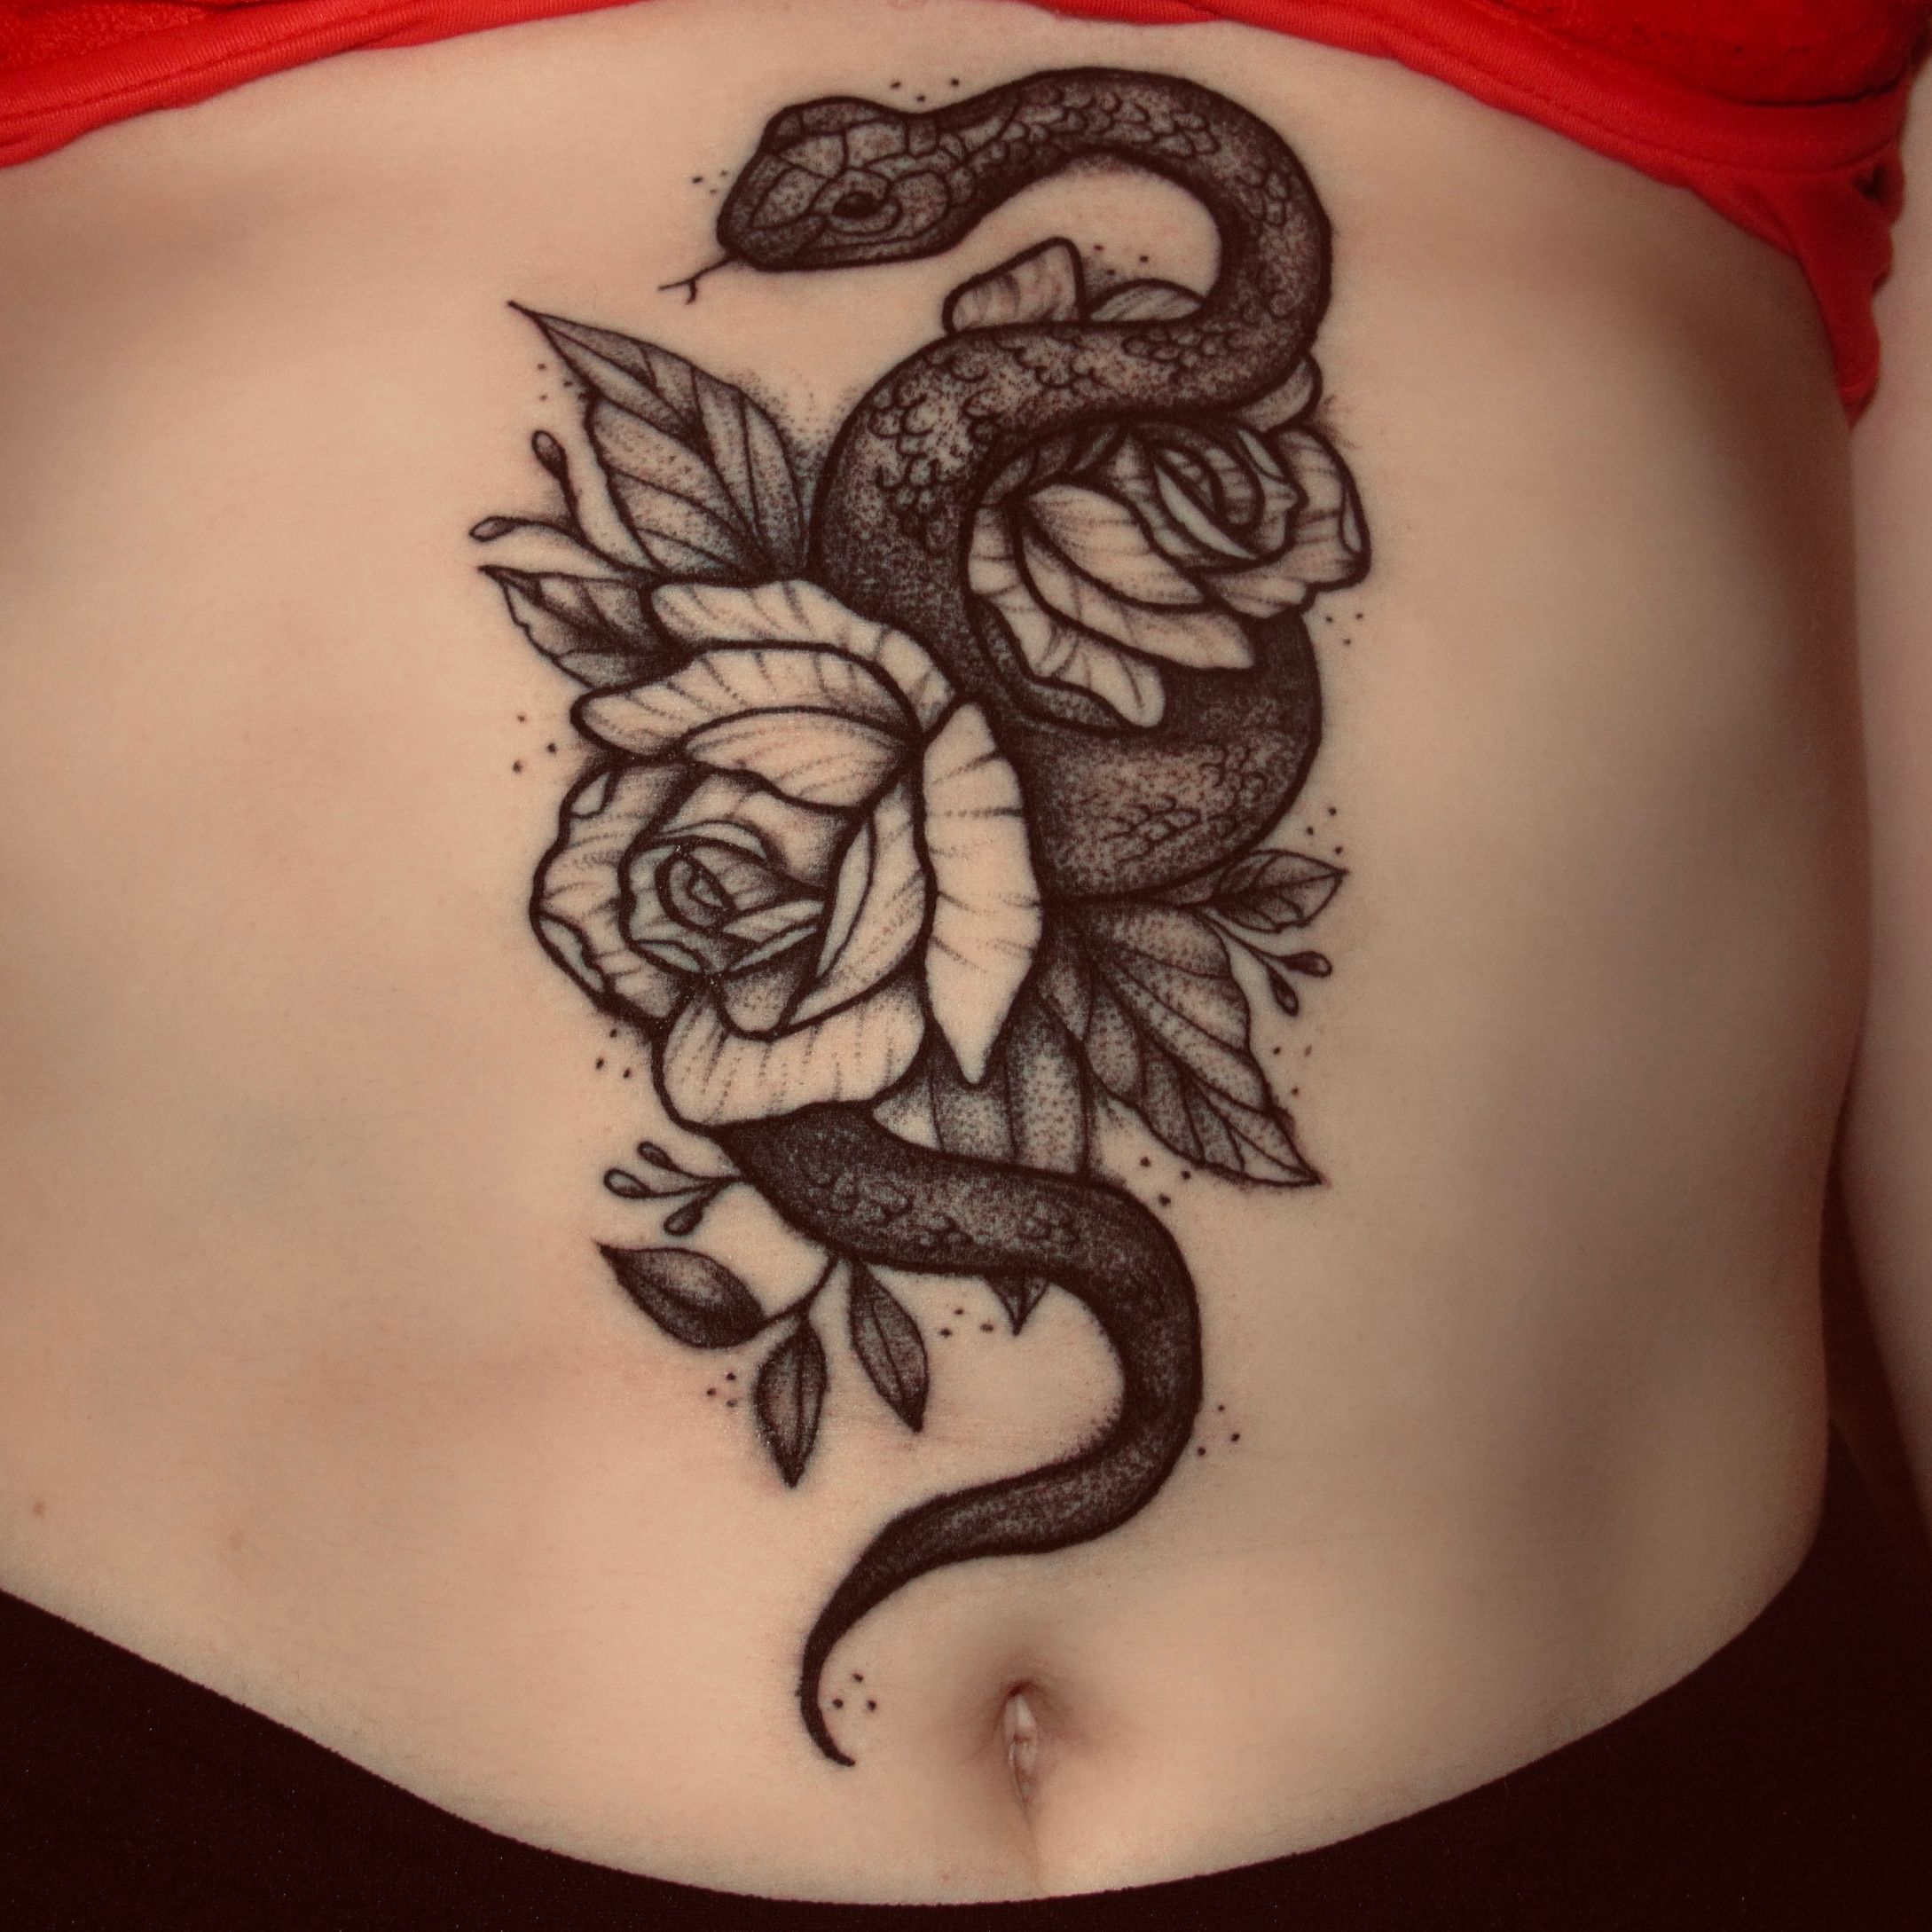 Rose tattoos on the stomach and hip hiding a skar